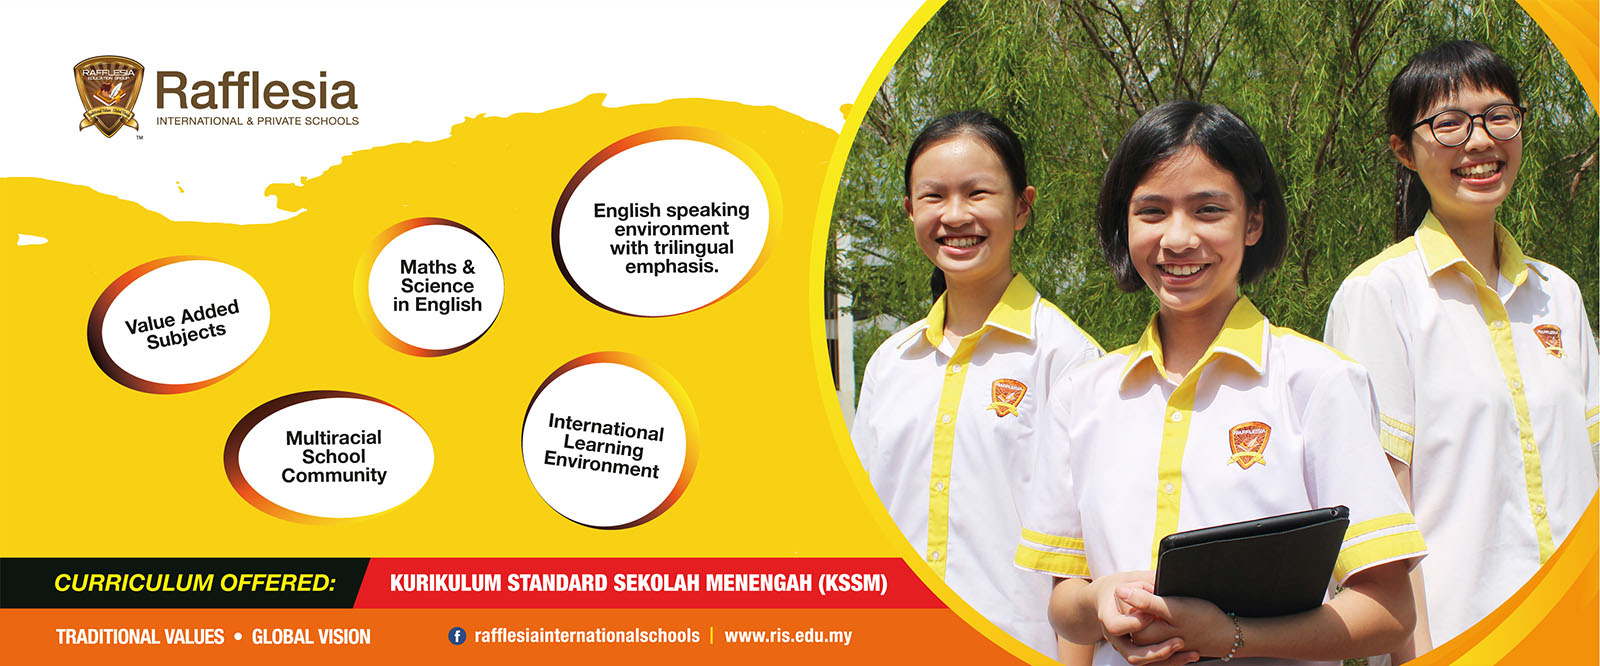 Curriculum offered at Rafflesia International School Kajang Campus